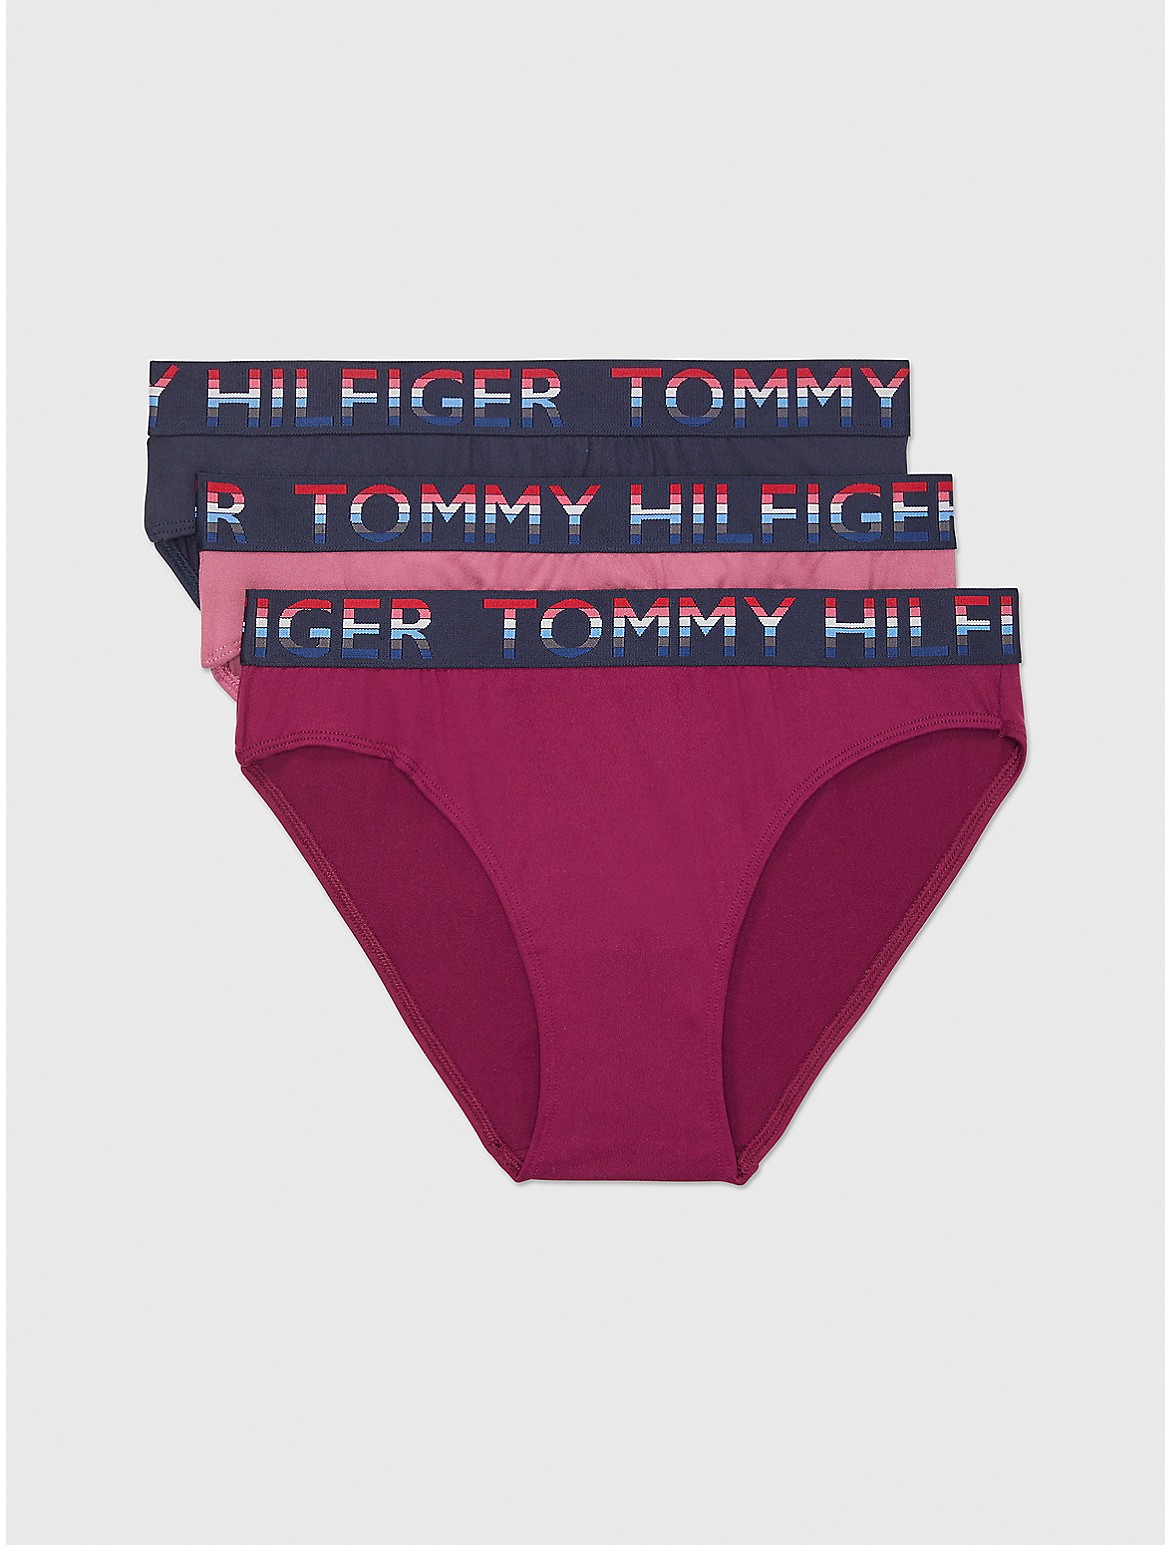 Tommy Hilfiger Women's Microfiber Bikini 3-Pack - Multi - M